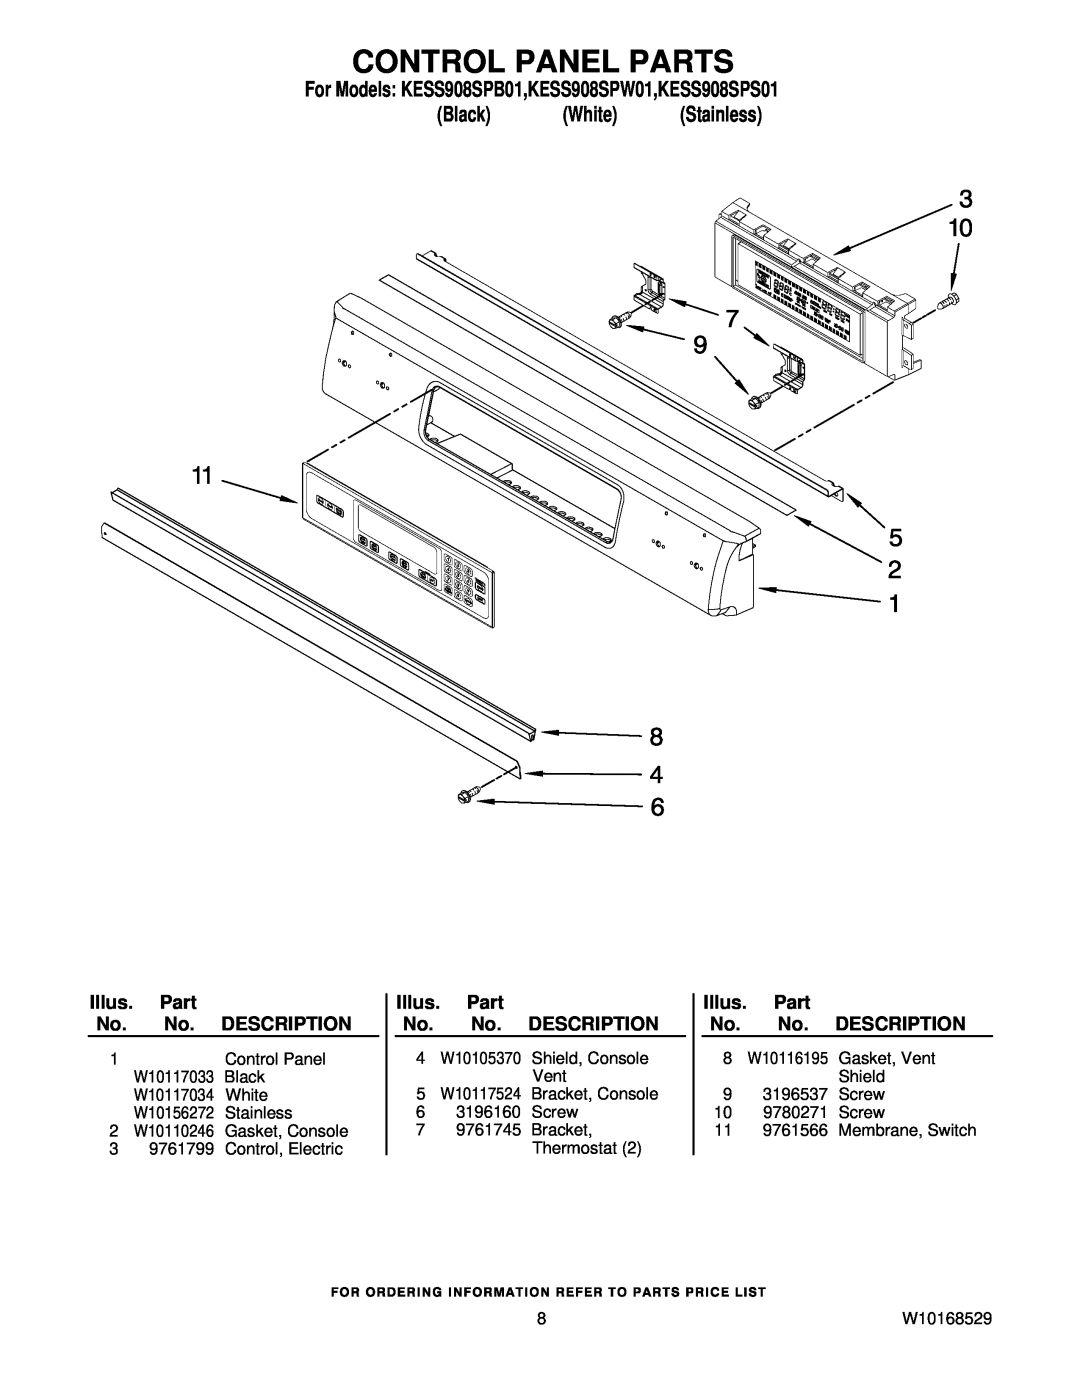 KitchenAid manual Control Panel Parts, For Models KESS908SPB01,KESS908SPW01,KESS908SPS01, Black White Stainless 